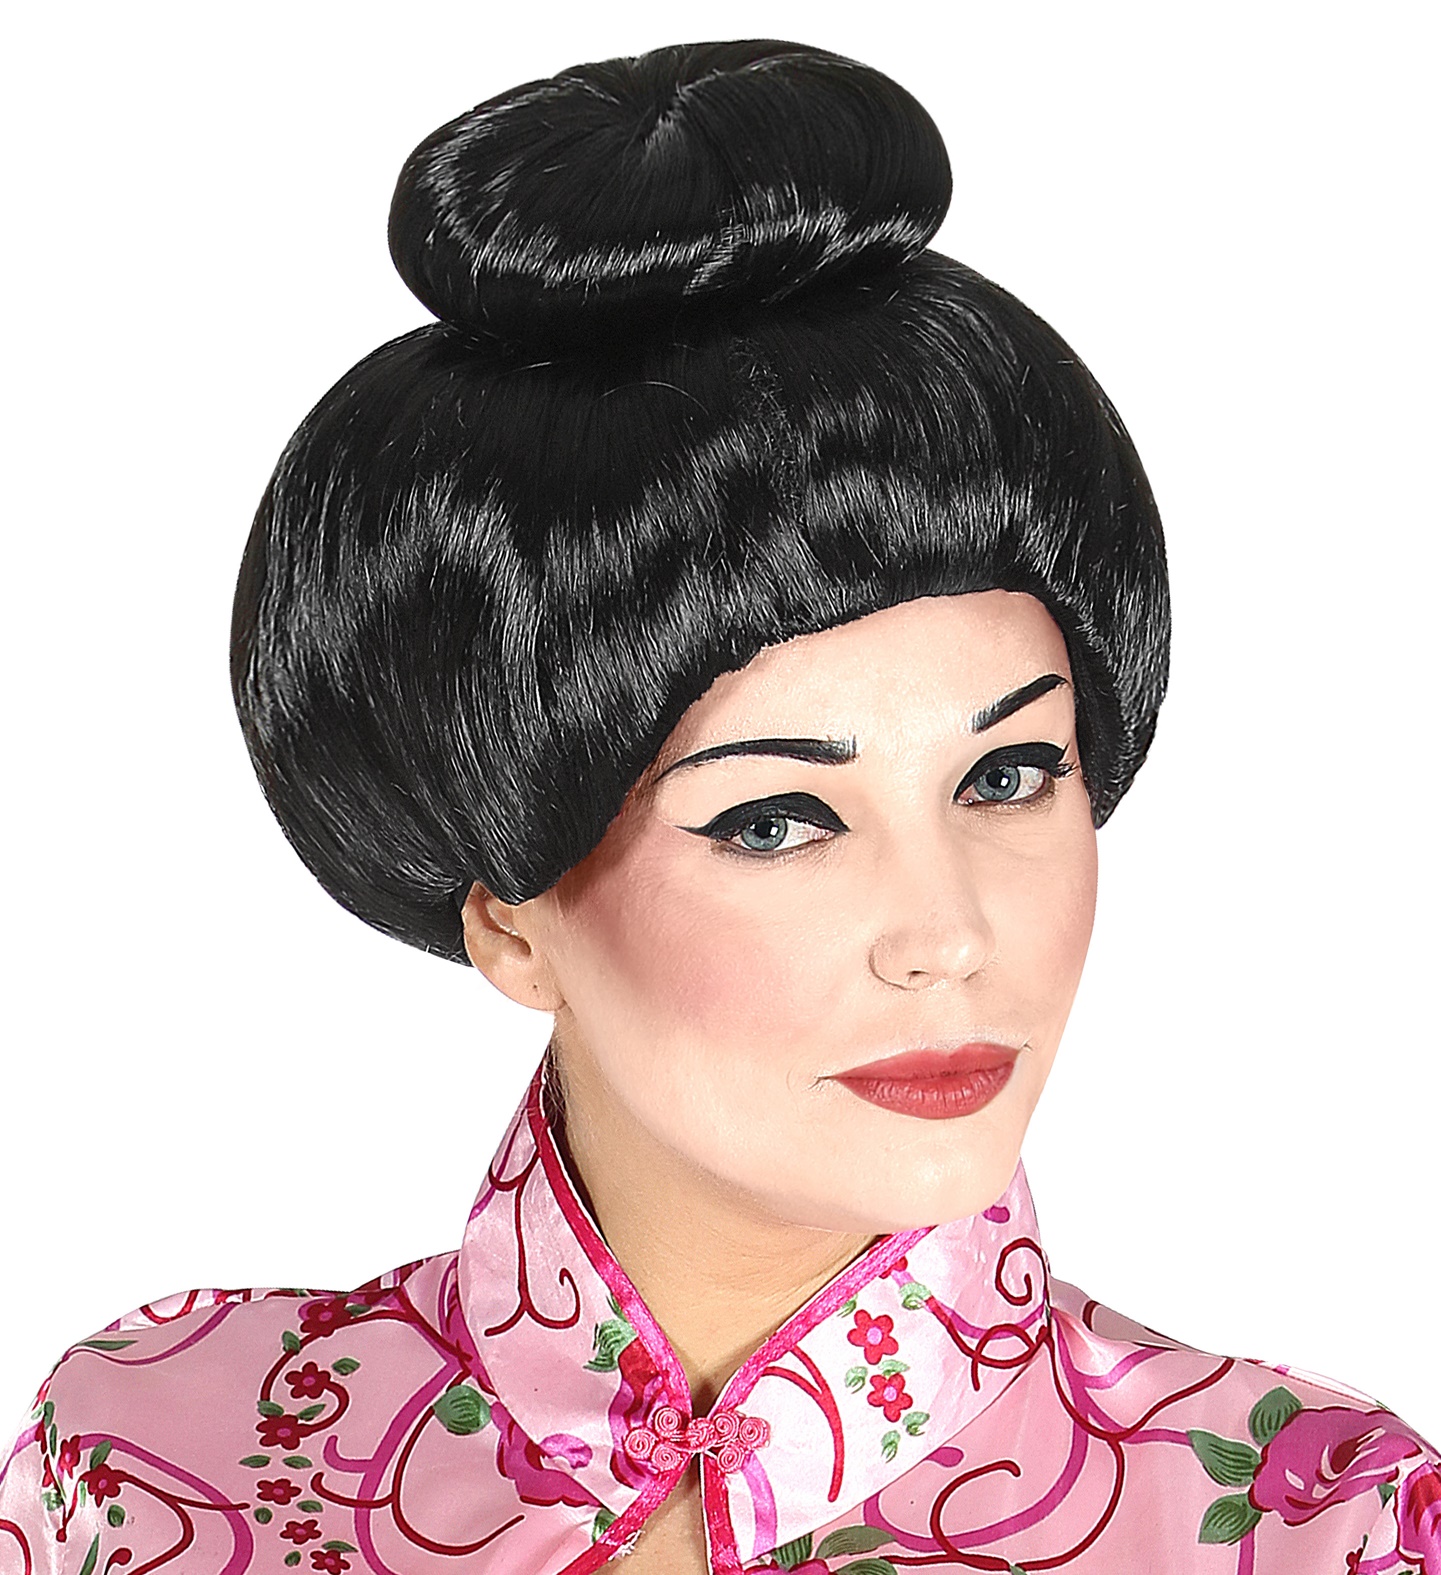 Peruca geisha